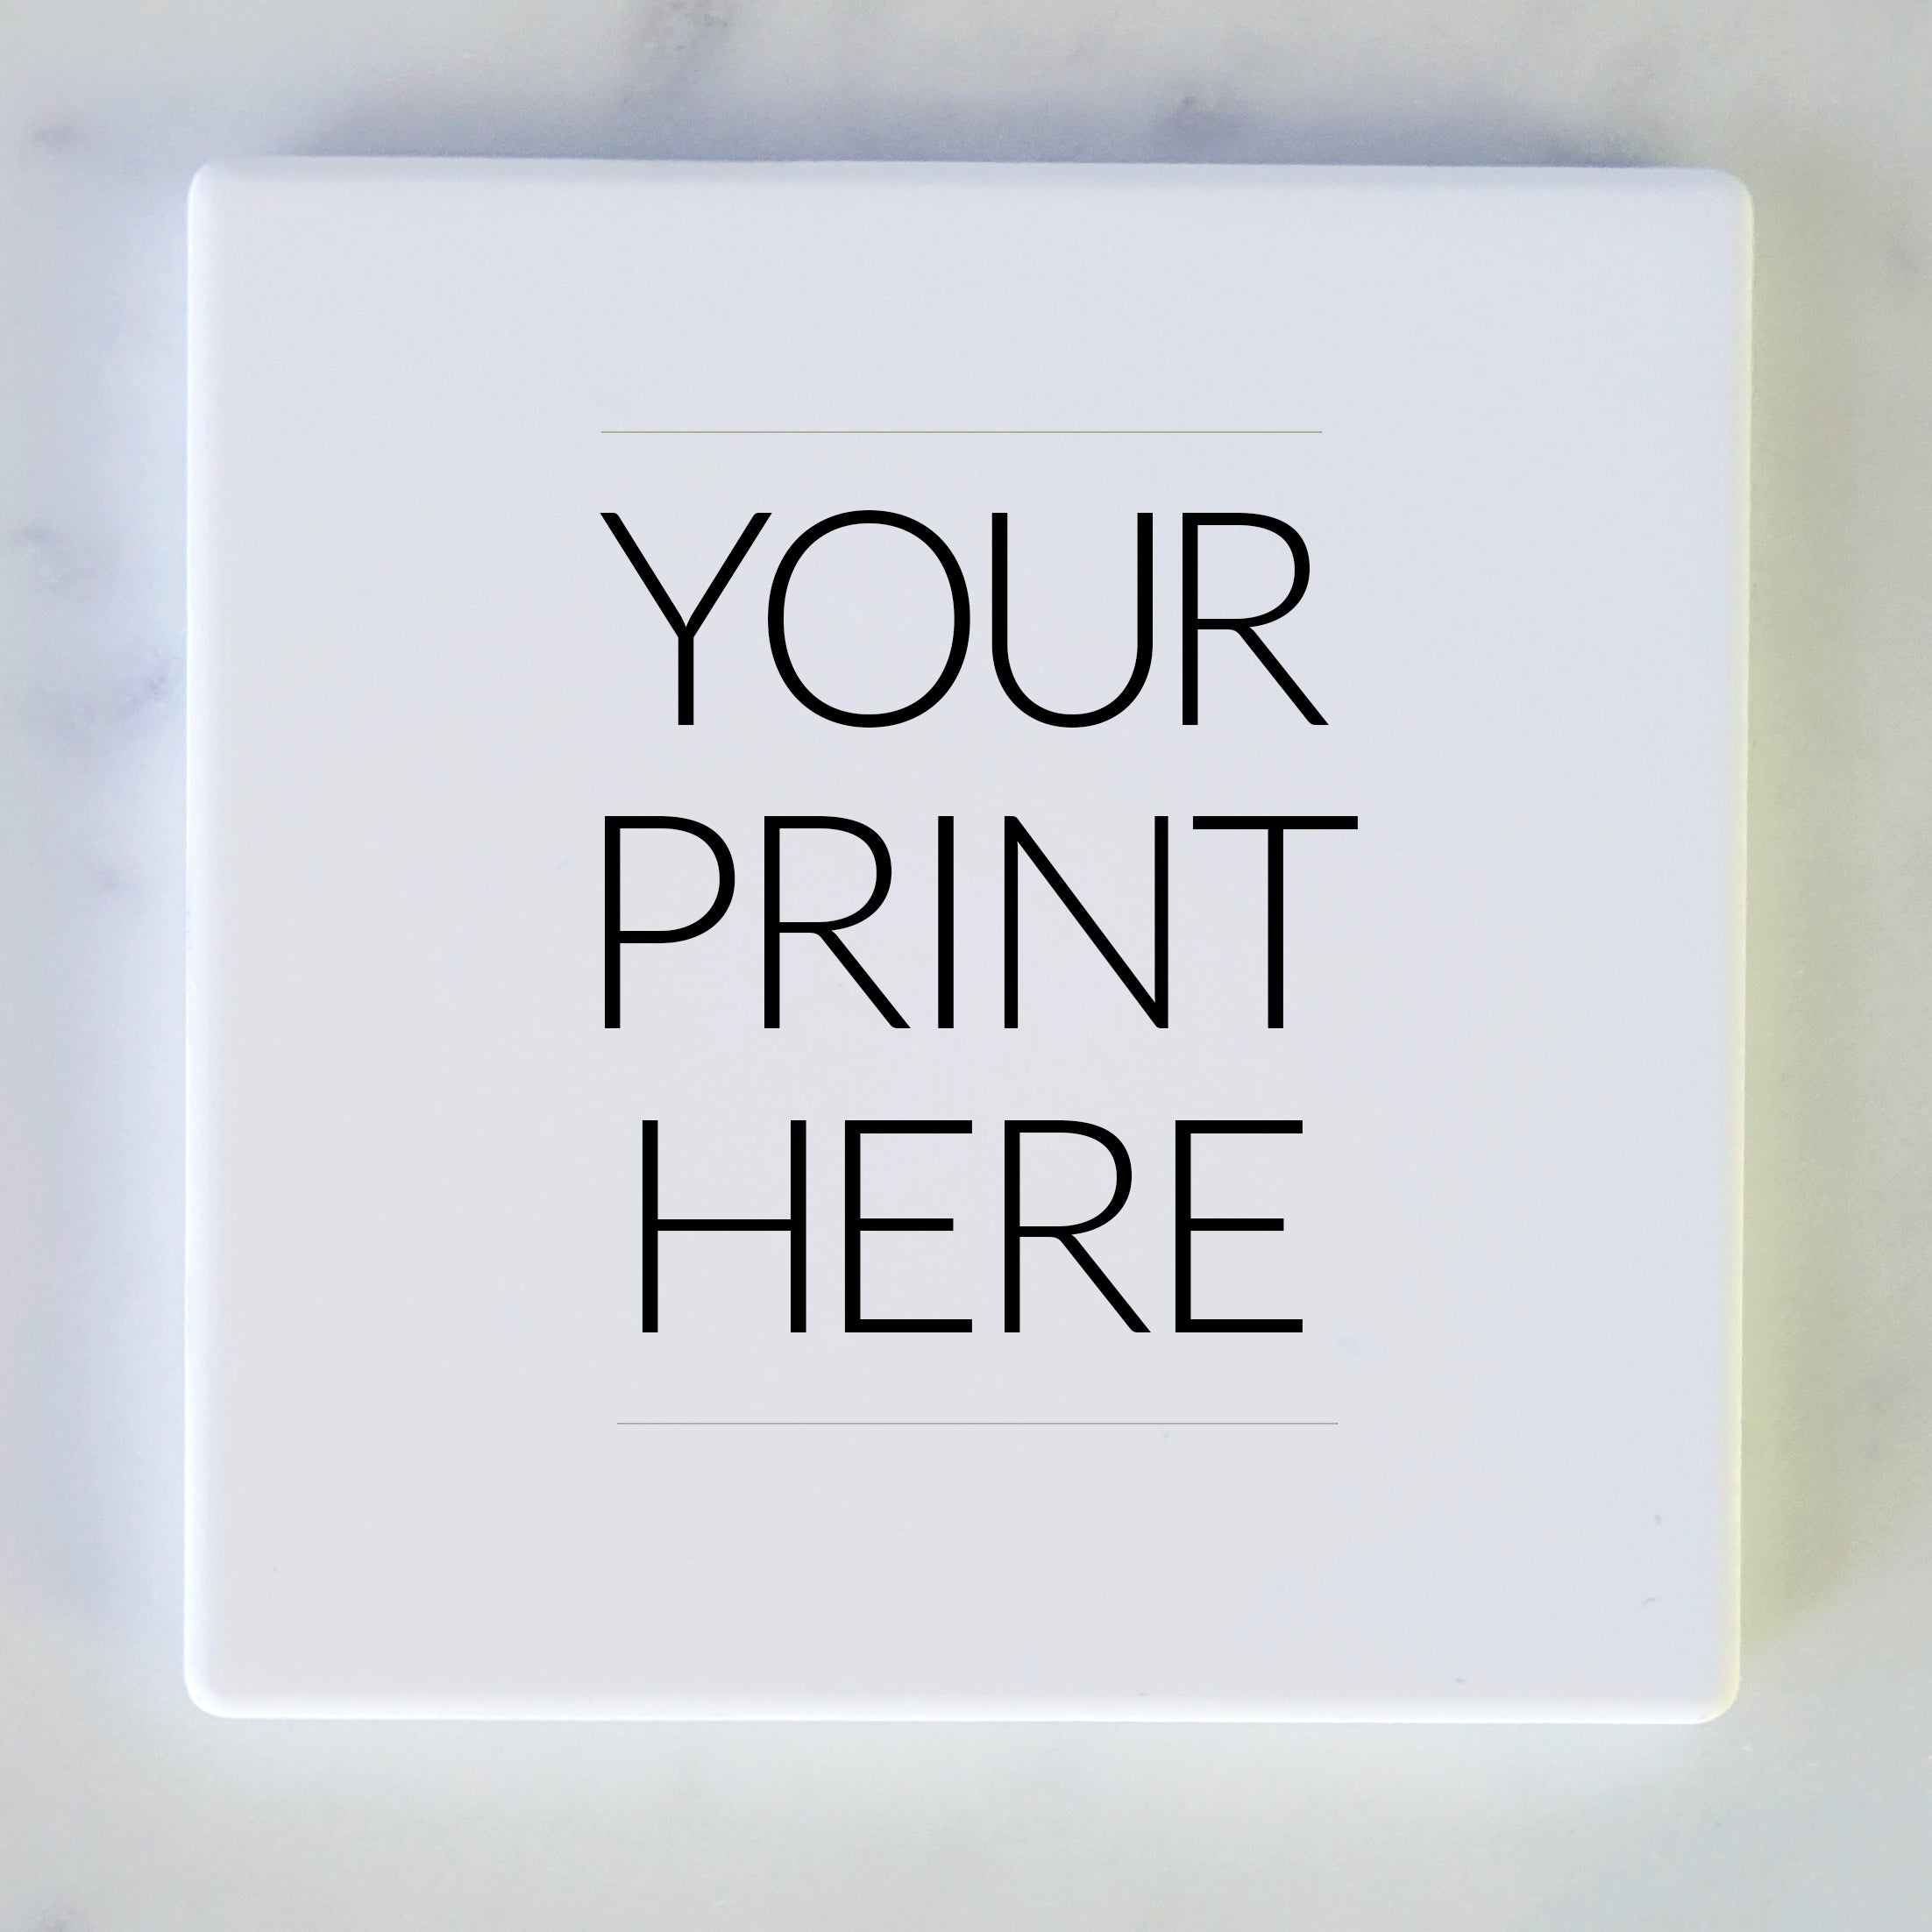 Personalized Ceramic Coaster - Pick Your Print